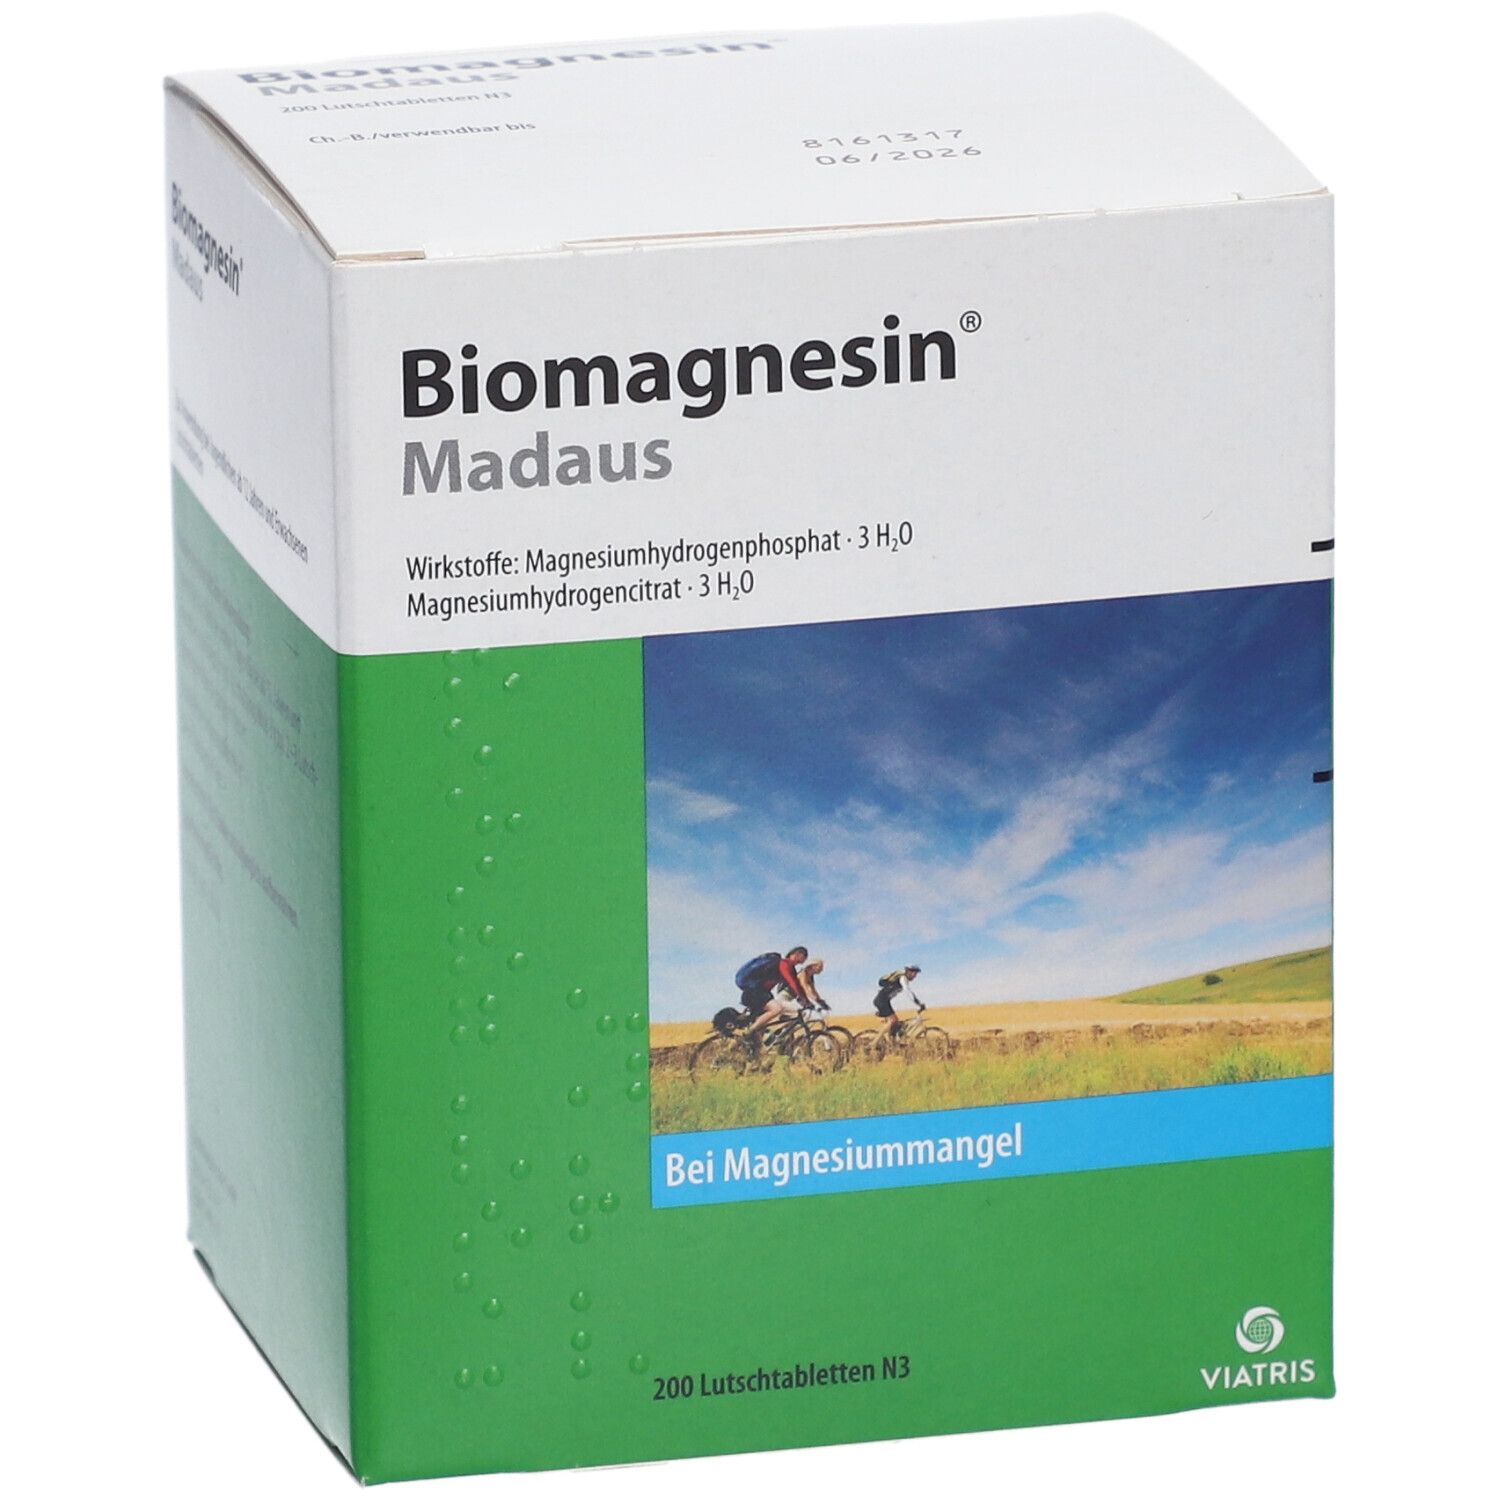 Biomagnesin® Madaus